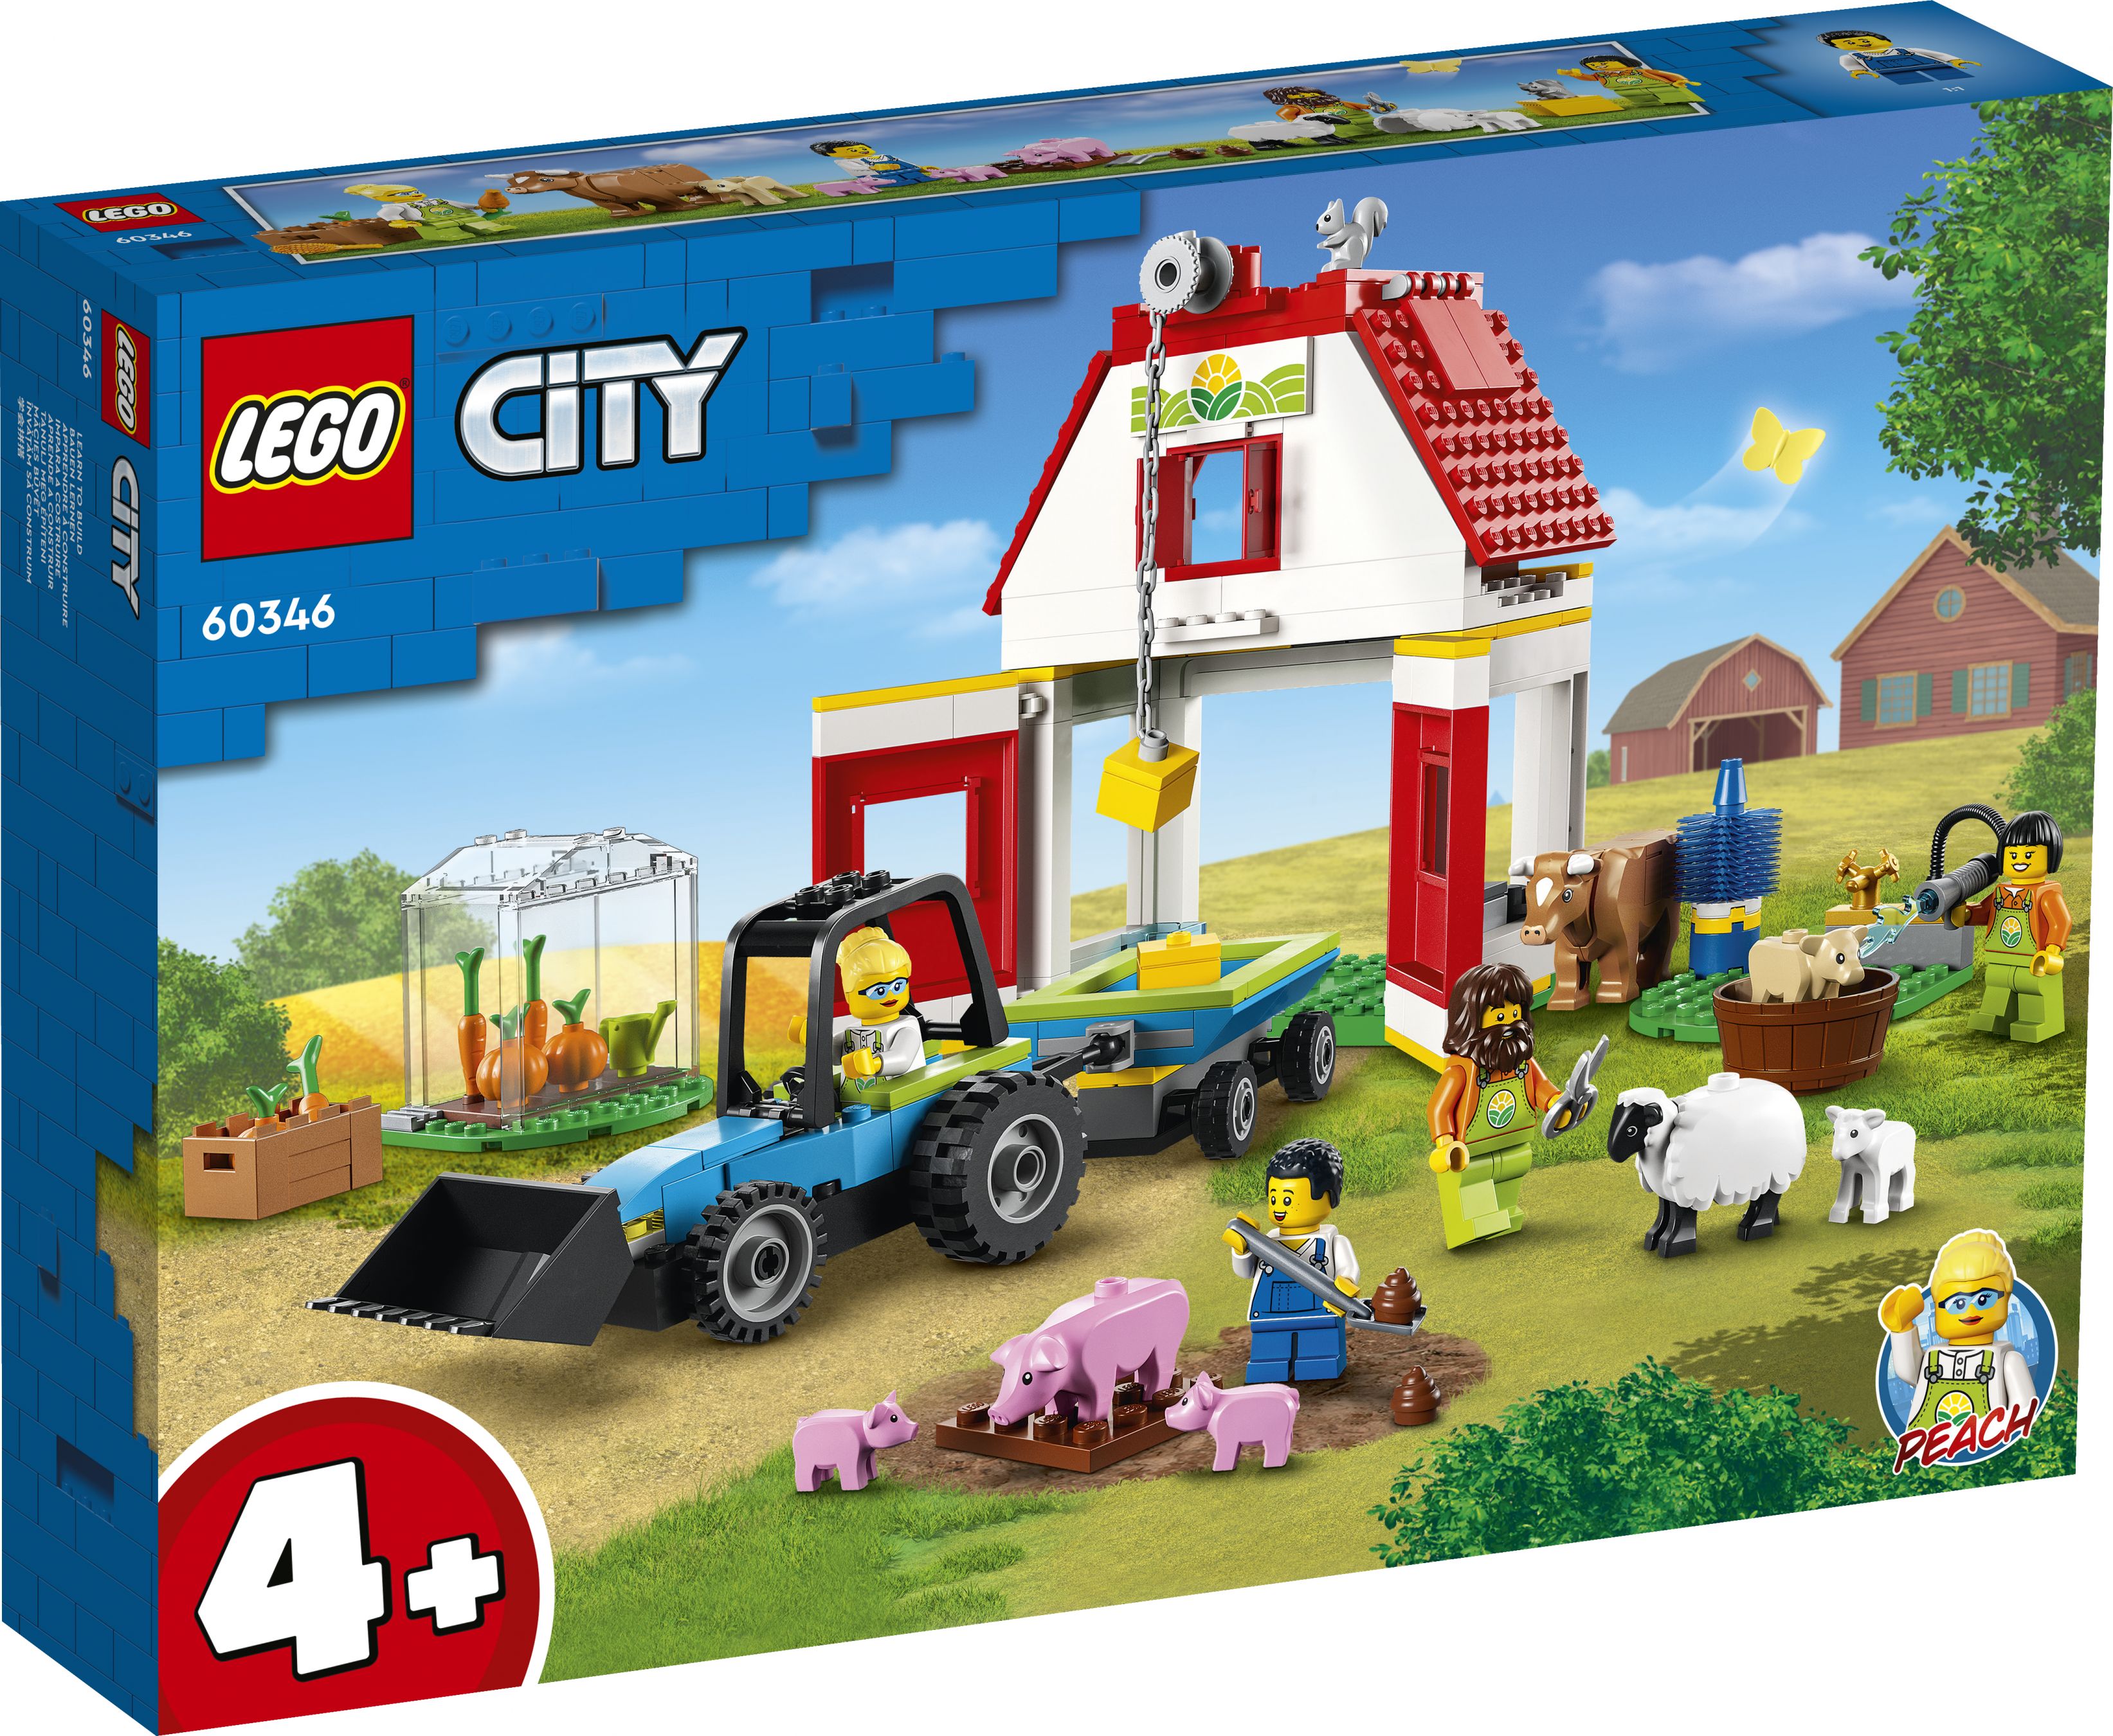 LEGO City 60346 Bauernhof mit Tieren LEGO_60346_Box1_V29.jpg